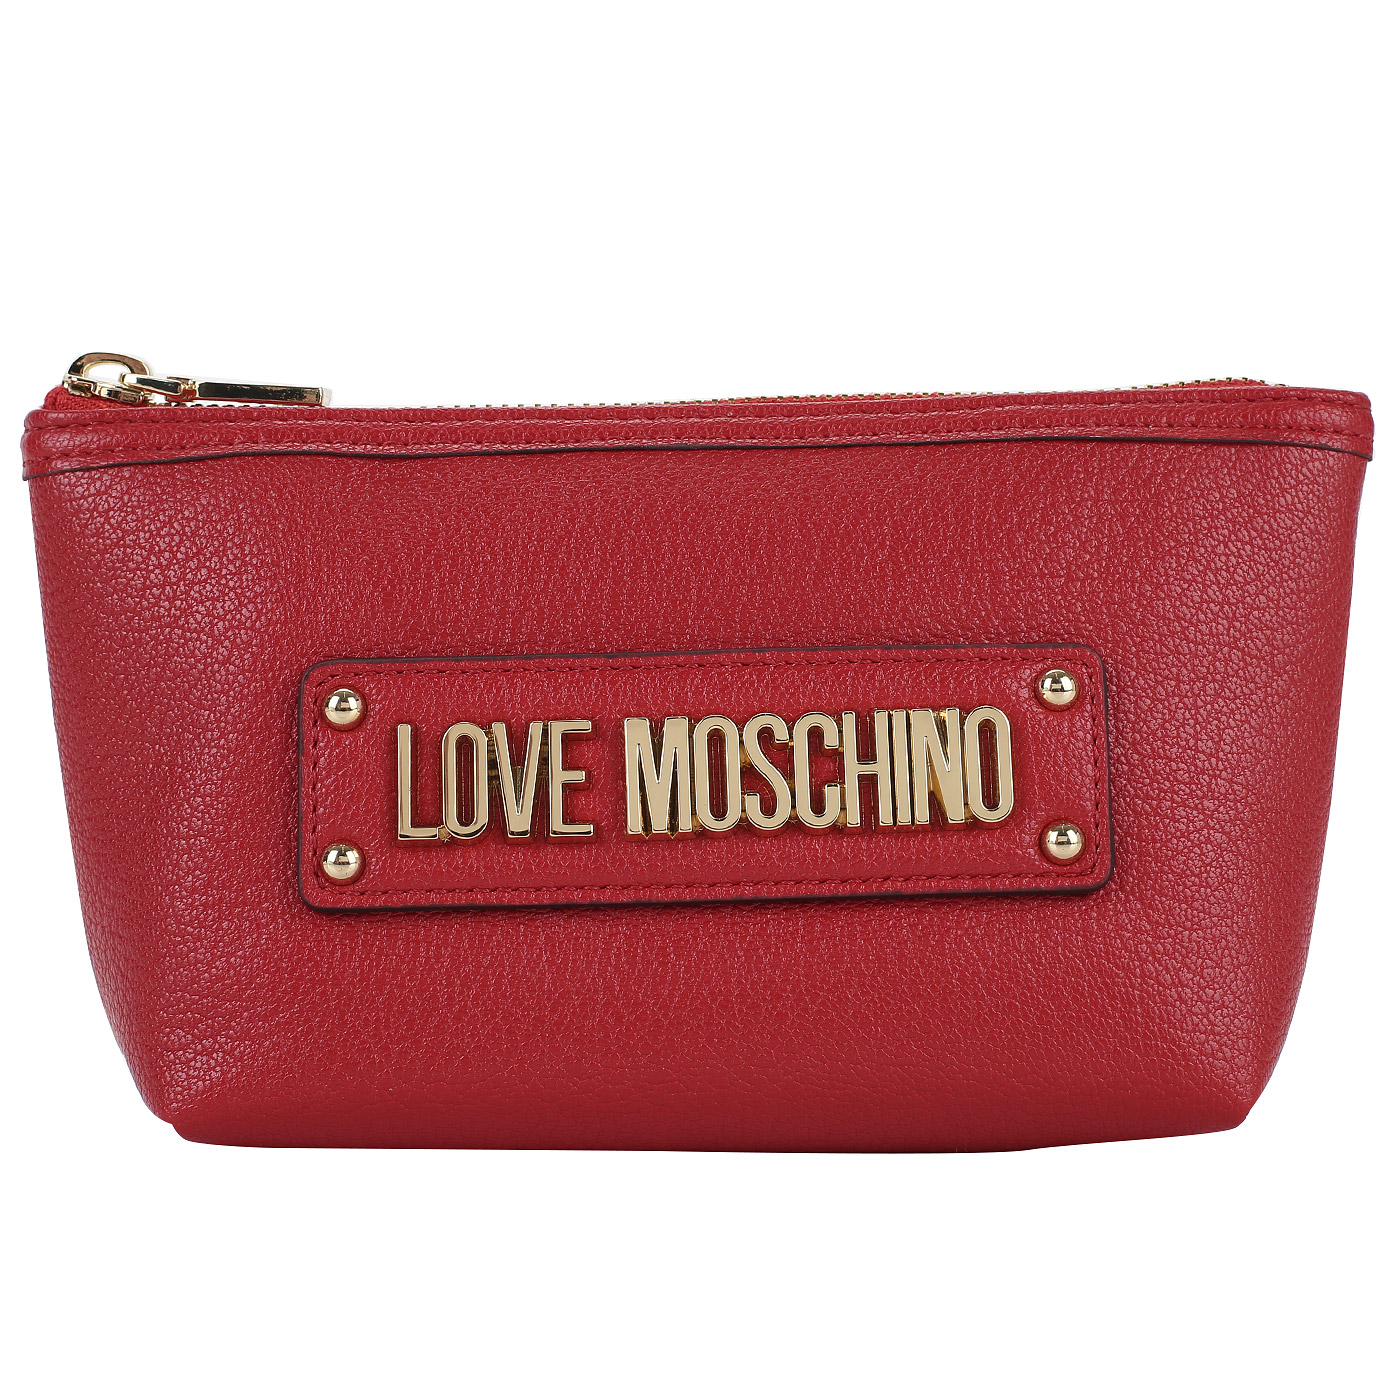 Love Moschino Косметичка с логотипом бренда